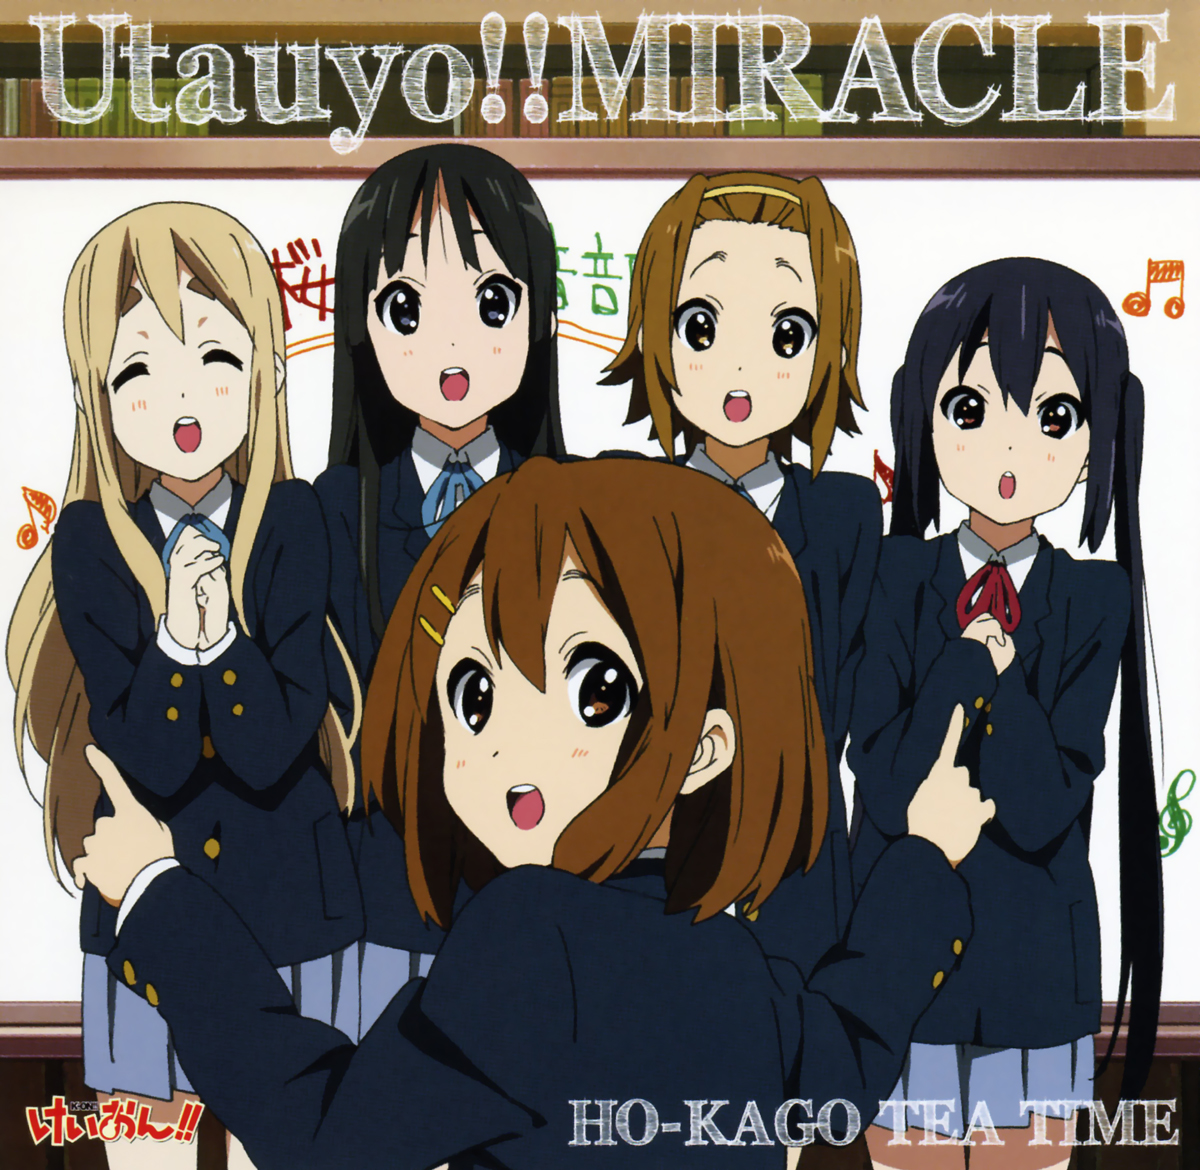 Utauyo!! MIRACLE (Song) | K-ON! Wiki | Fandom